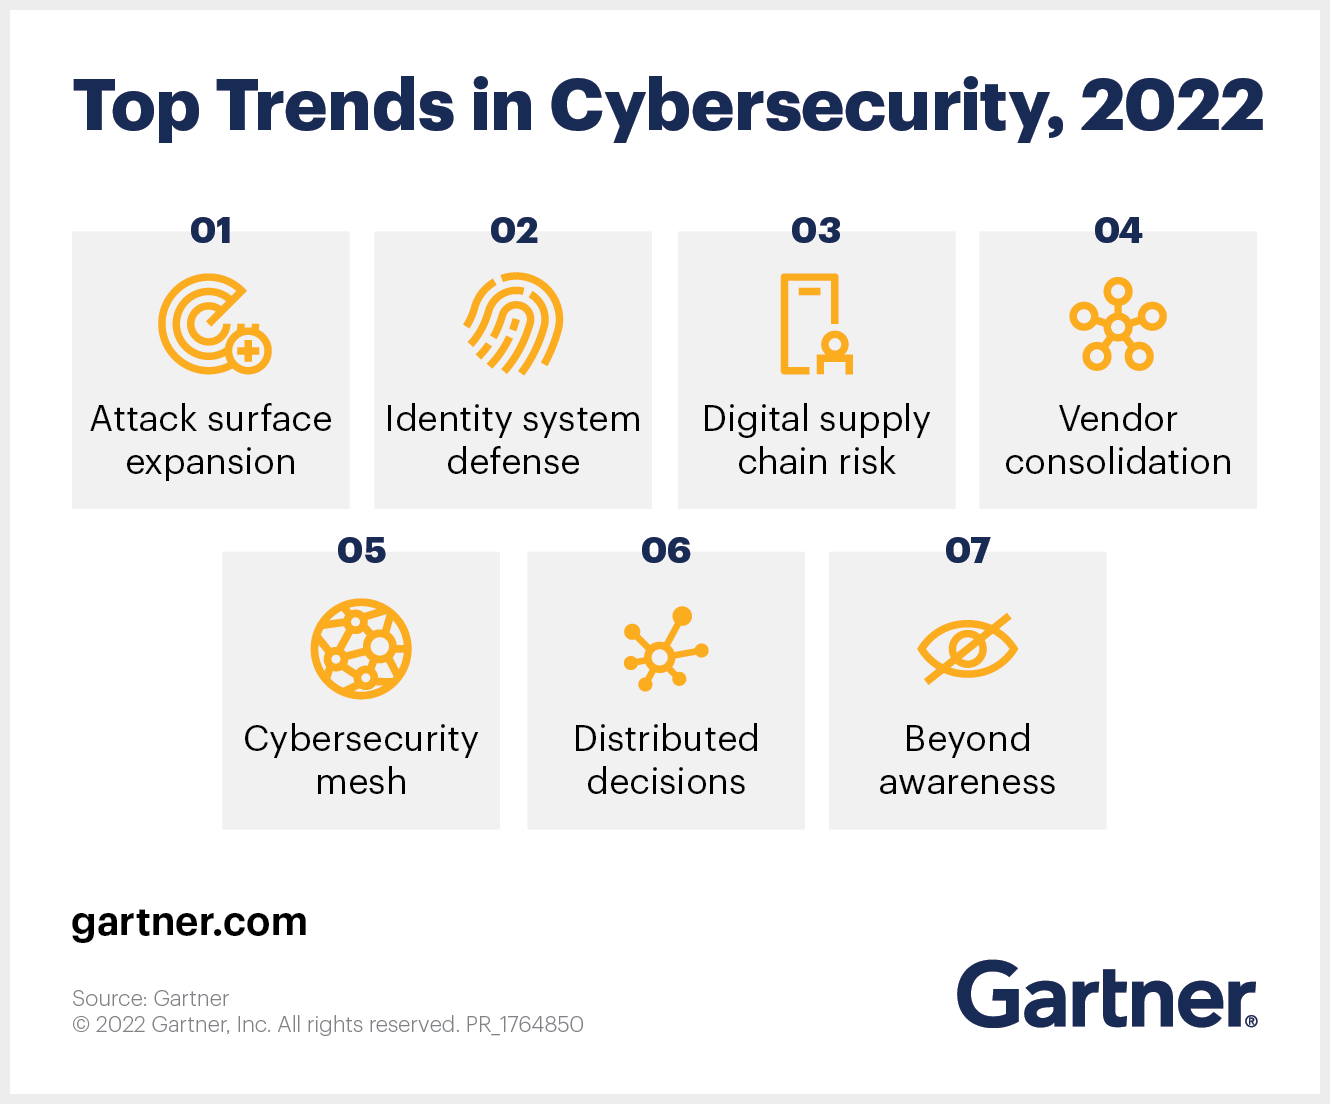 Top Trends in Cybersecurity, 2022